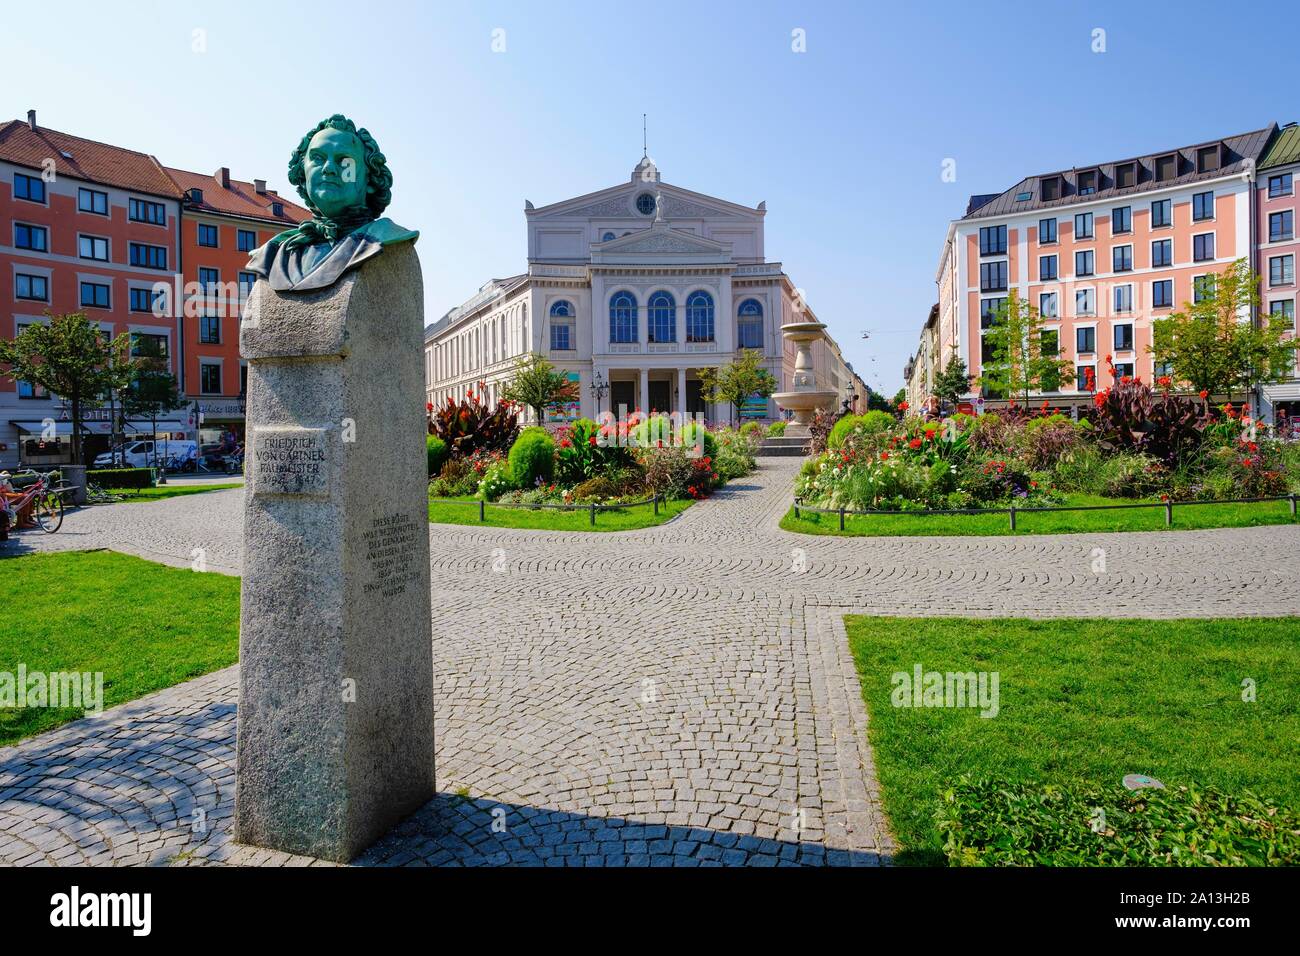 Busto di Friedrich von Gartner davanti al Teatro di Stato a Gartnerplatz, Isarvorstadt, Monaco di Baviera, Baviera, Baviera, Germania Foto Stock